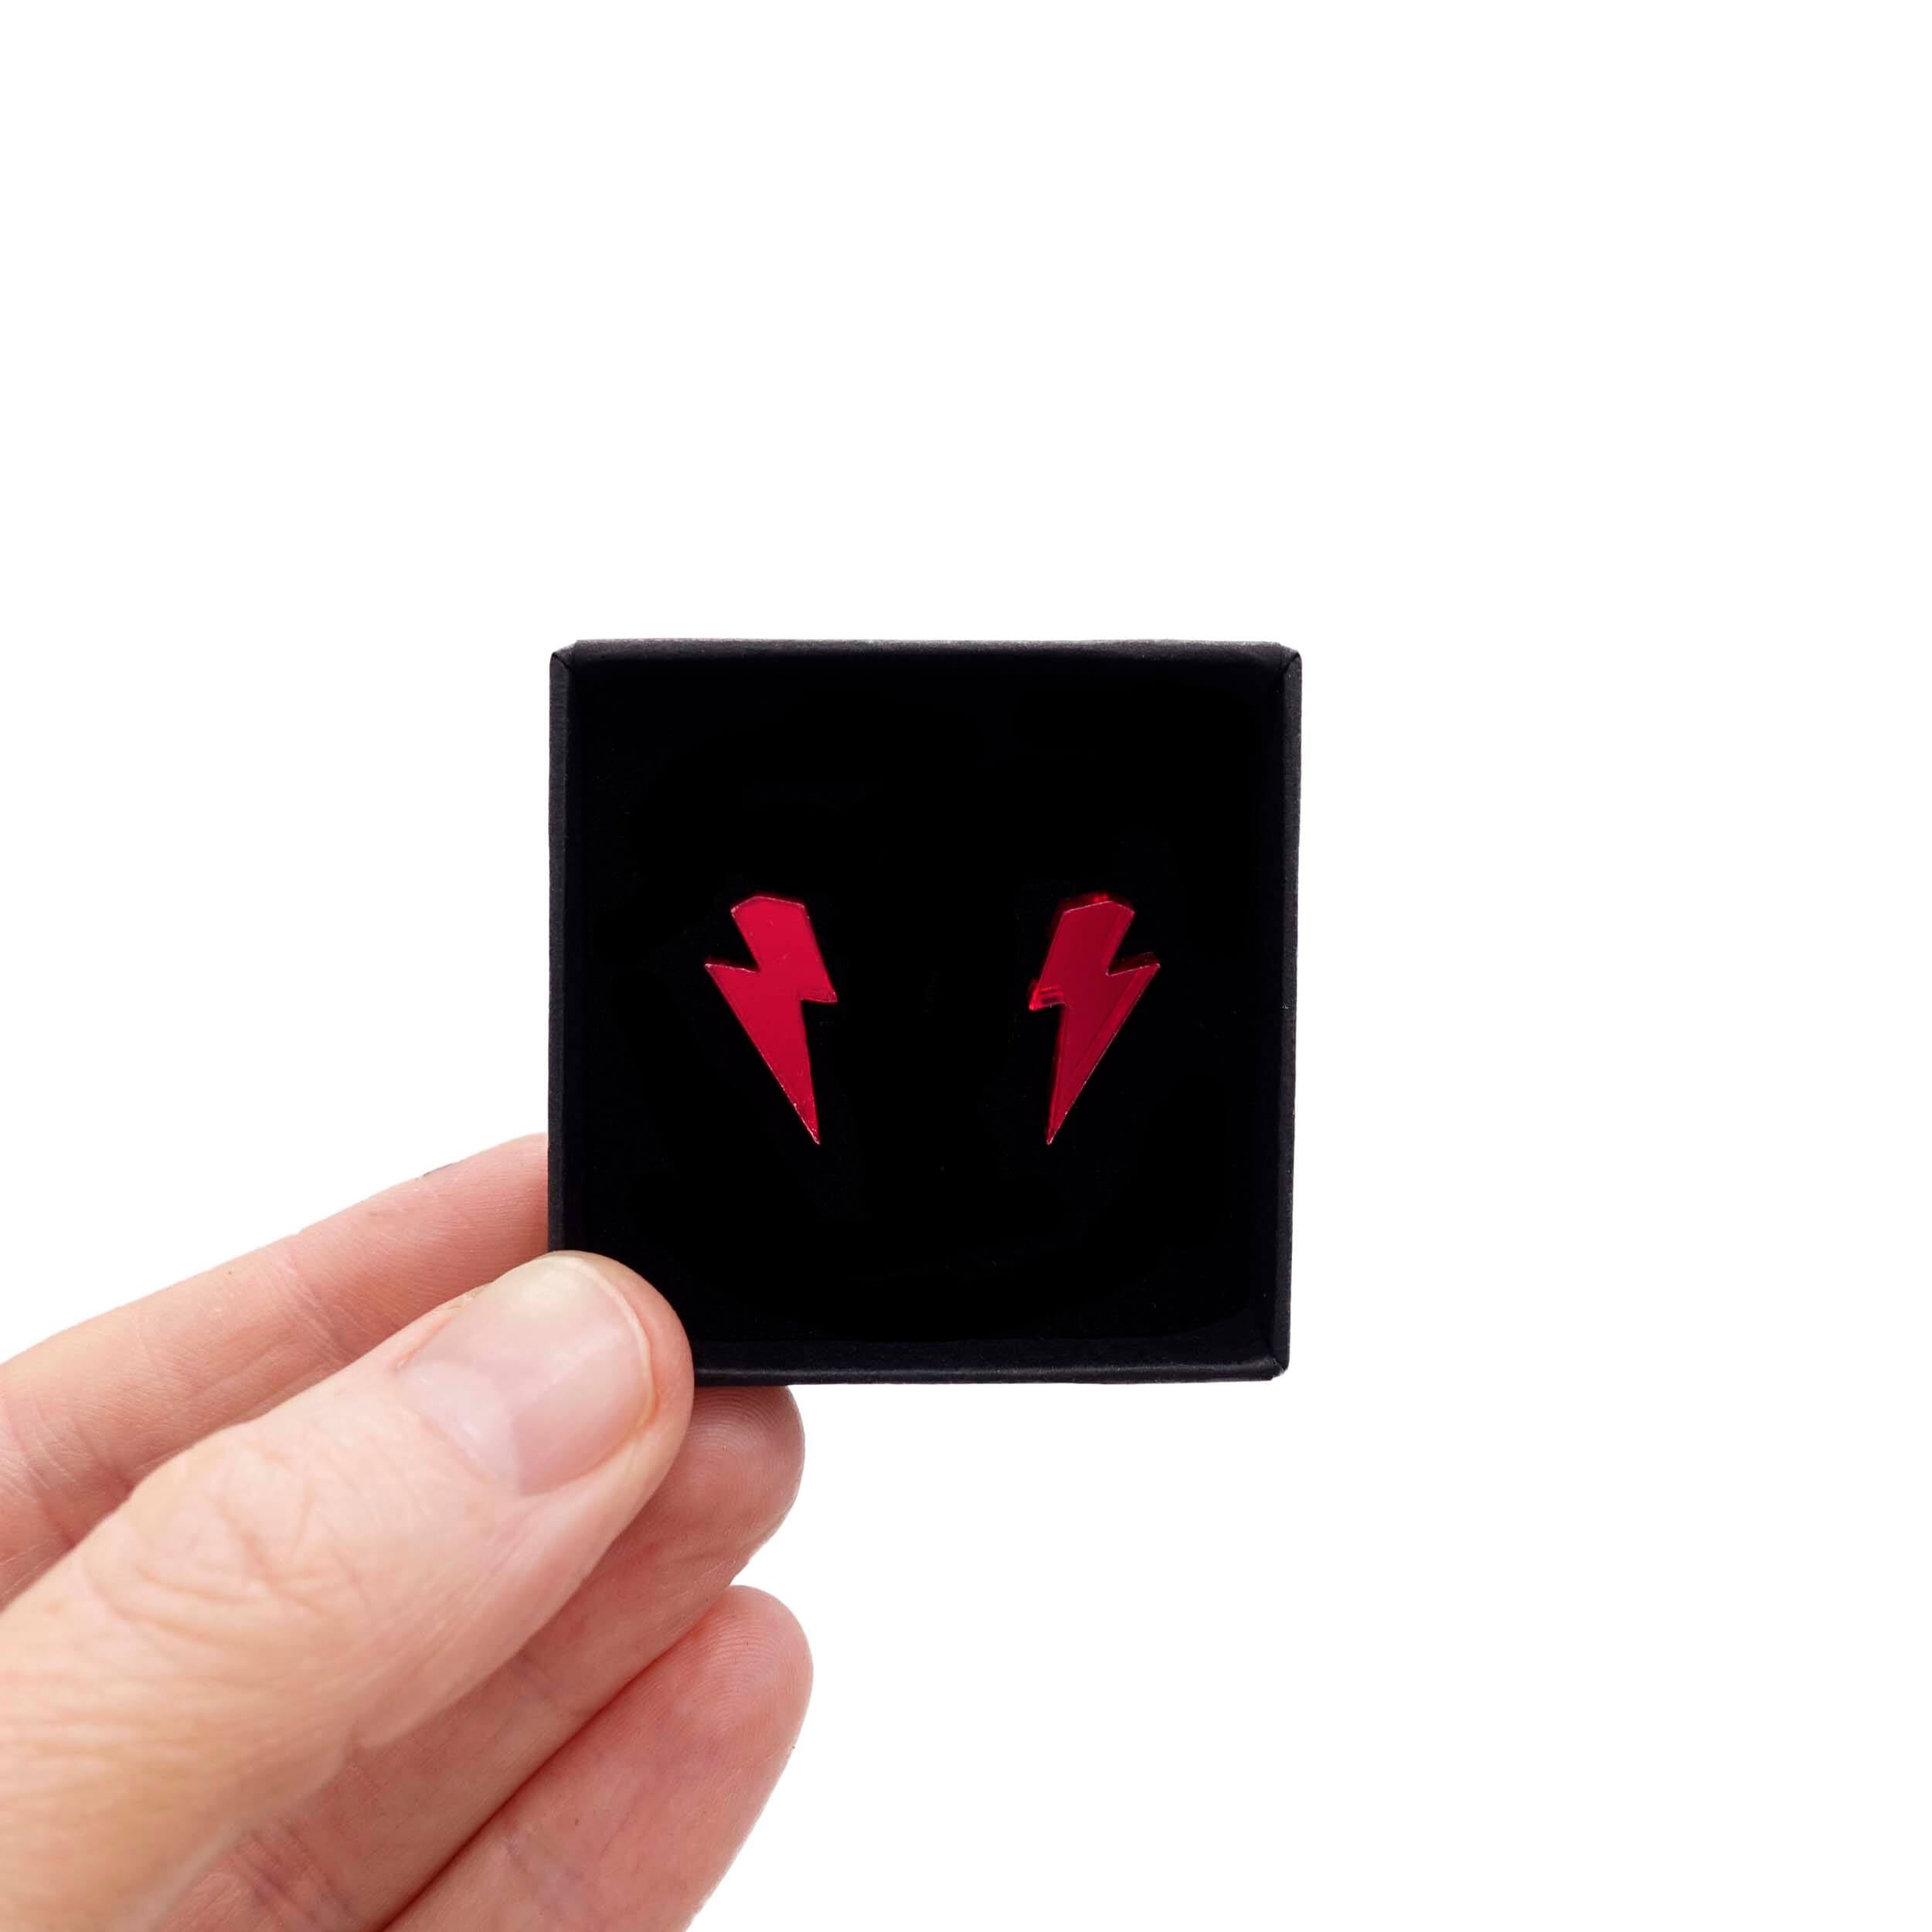 Tiny lightning bolt earrings in ruby red mirror. 